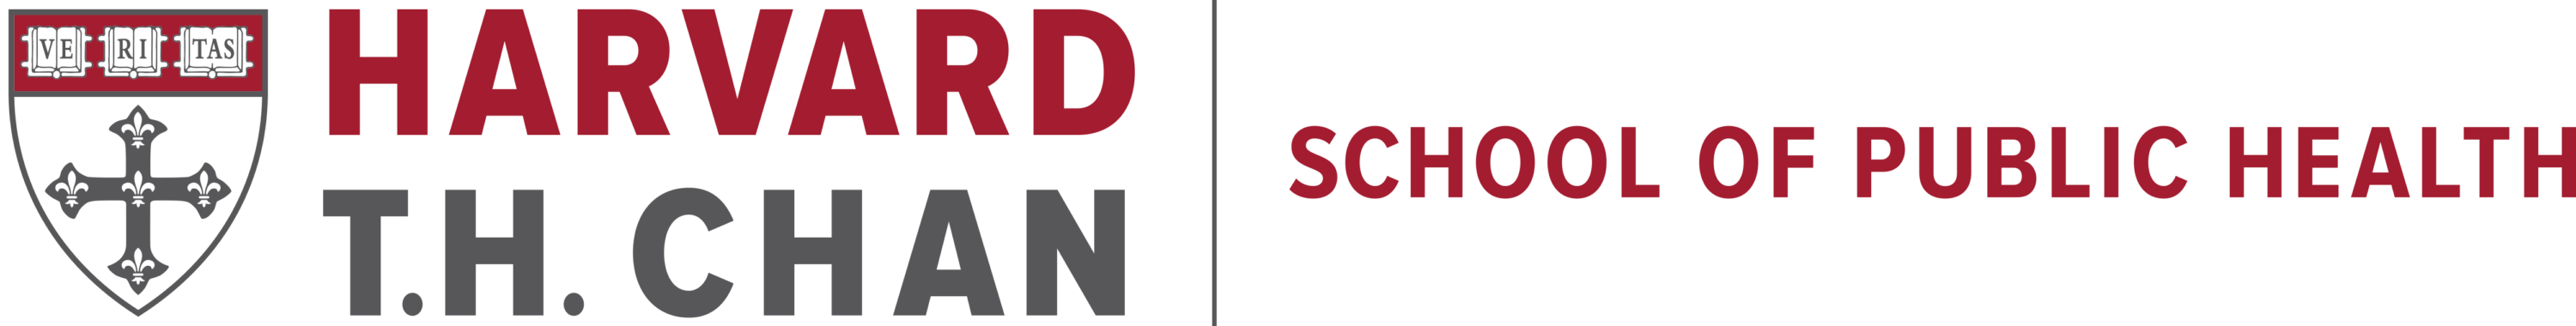 Harvard T.H. Chan School of Public Health Logo horizontal